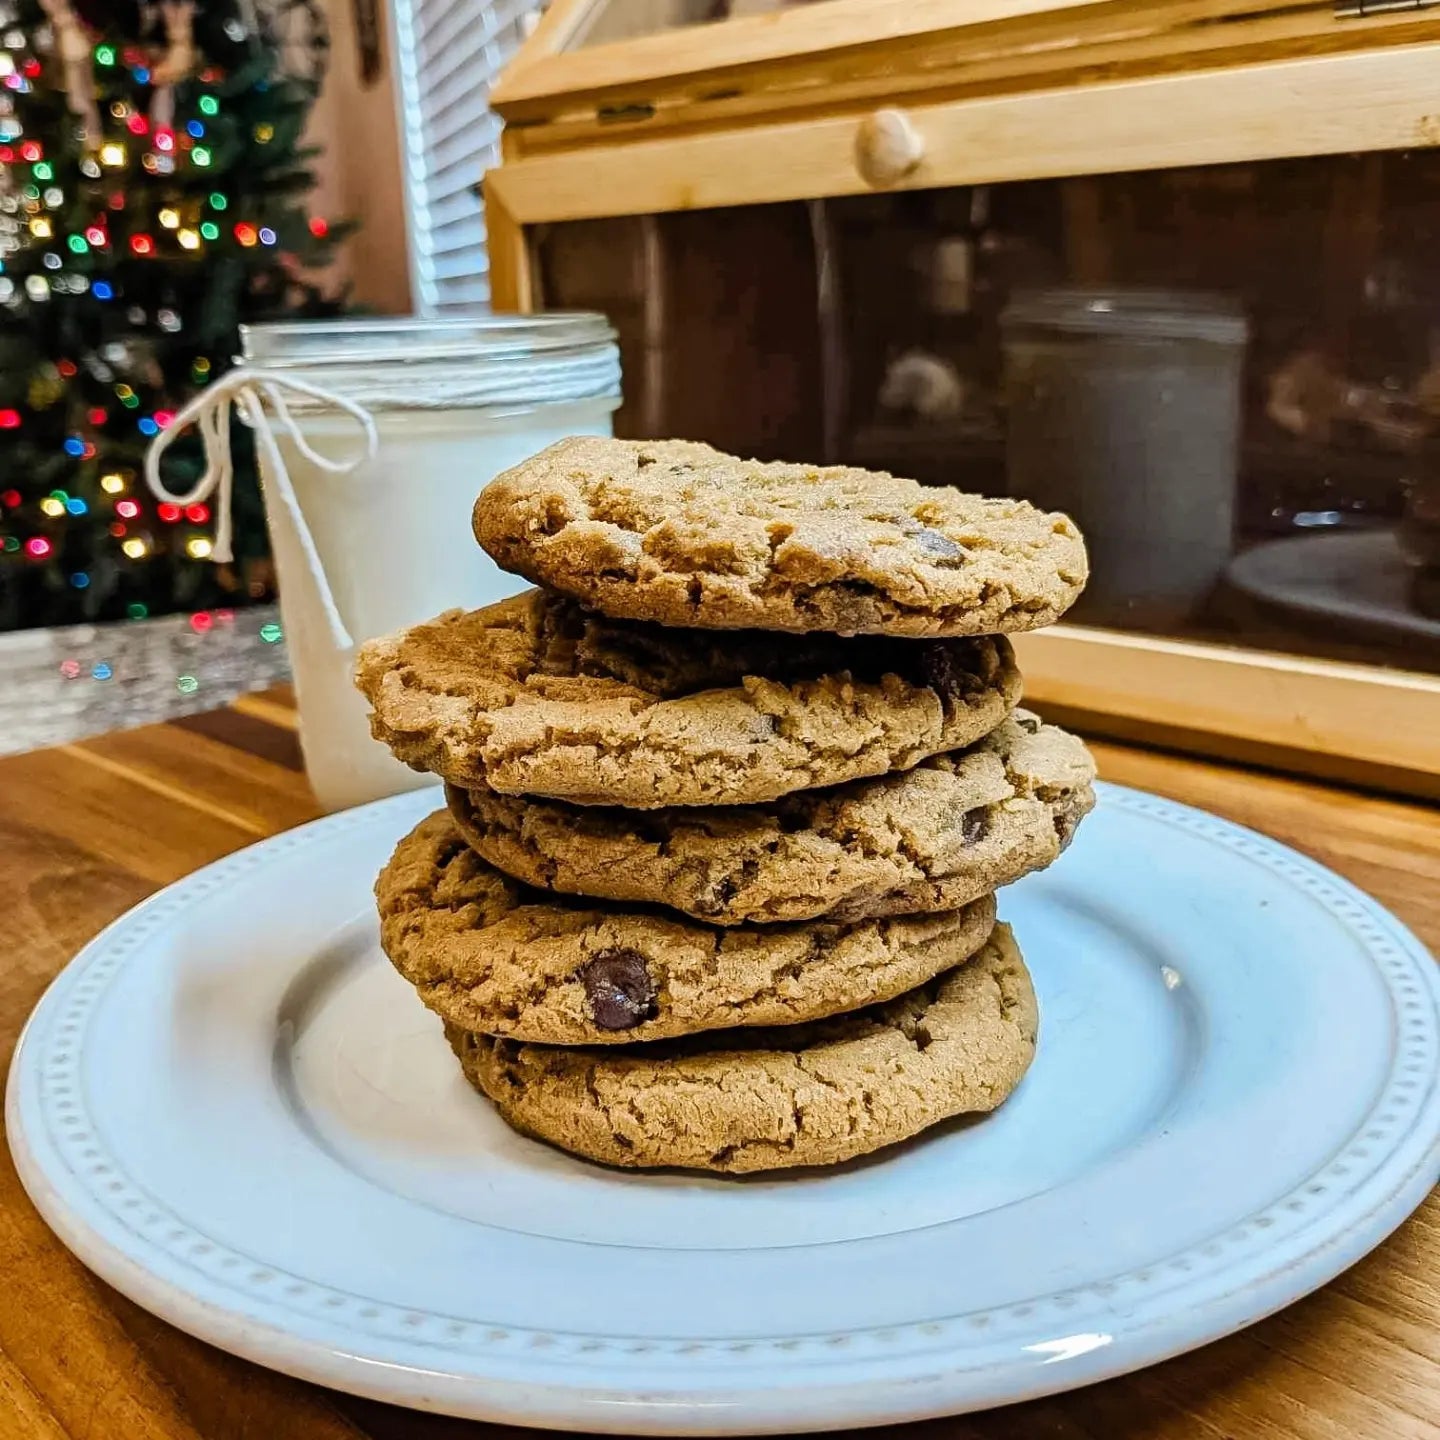 A half dozen cookies